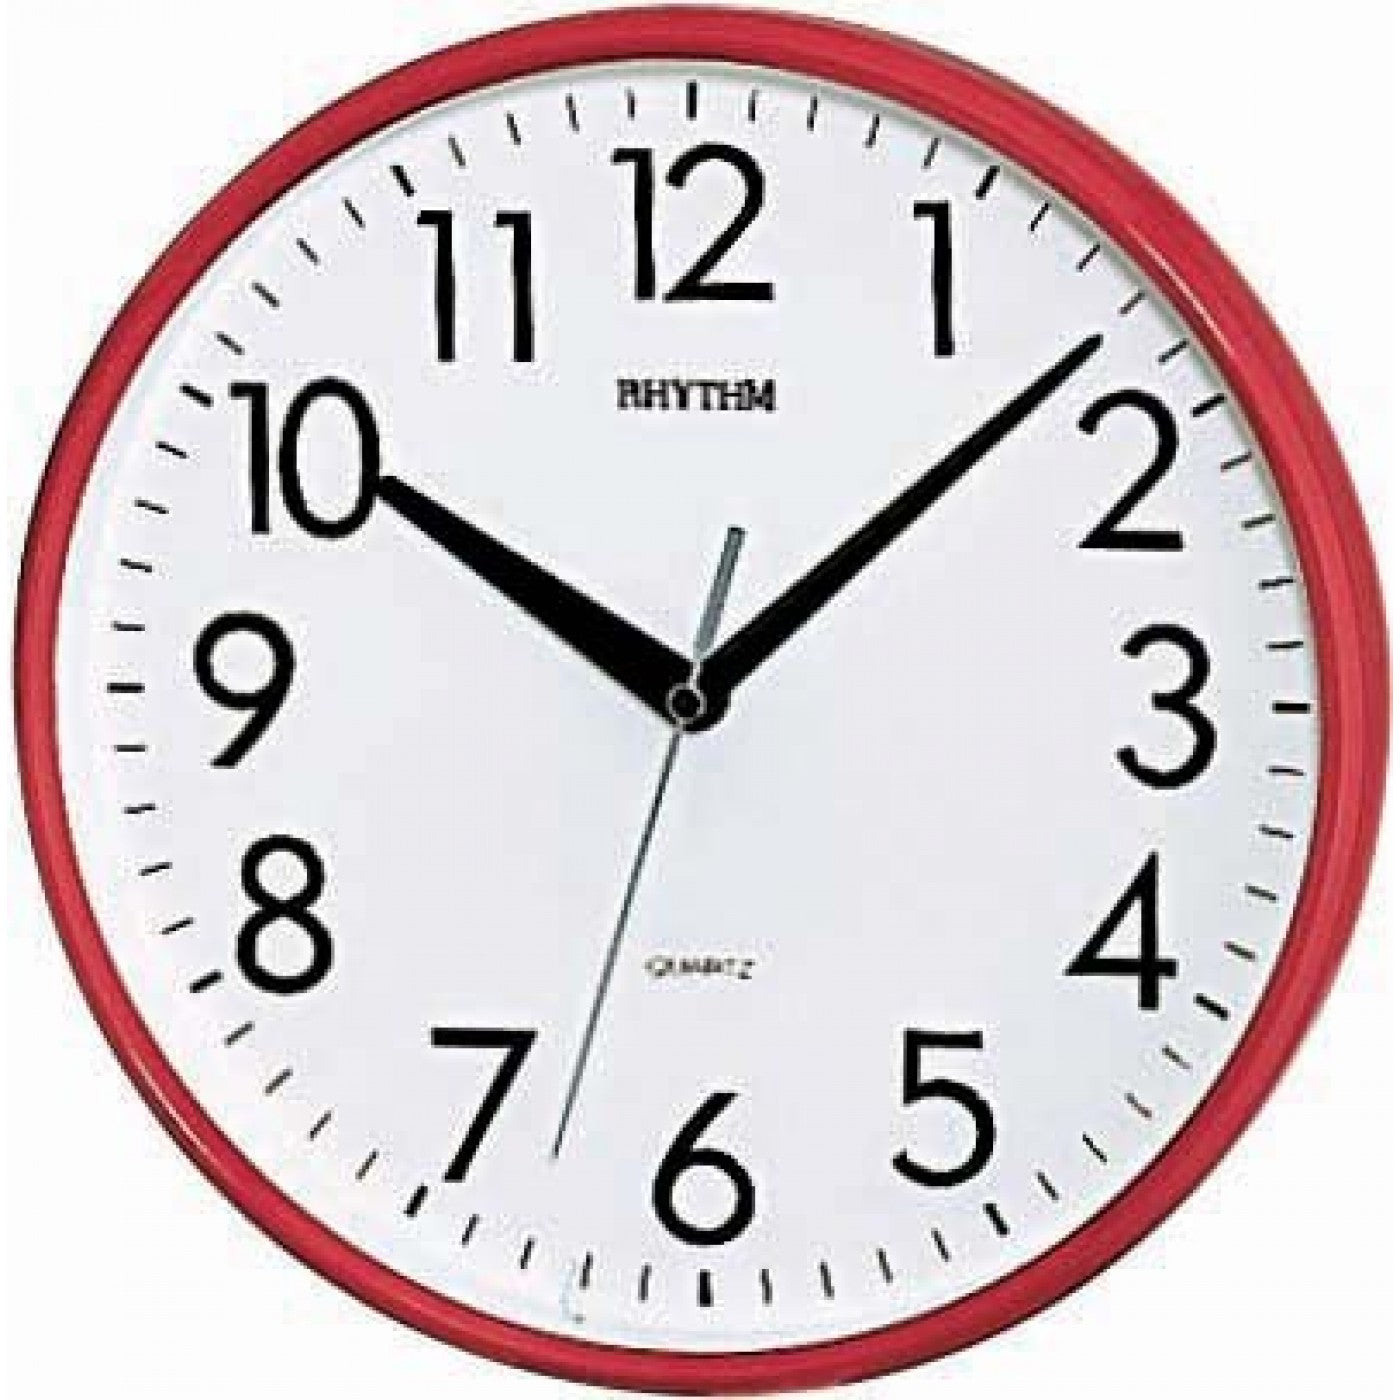 Rhythm Plastic Wall Clock Red CMG716NR01 | stylish watch | accurate timekeeping | wall clock | round clock | Casio watch | wall watch | home décor | timepiece | Halabh.com